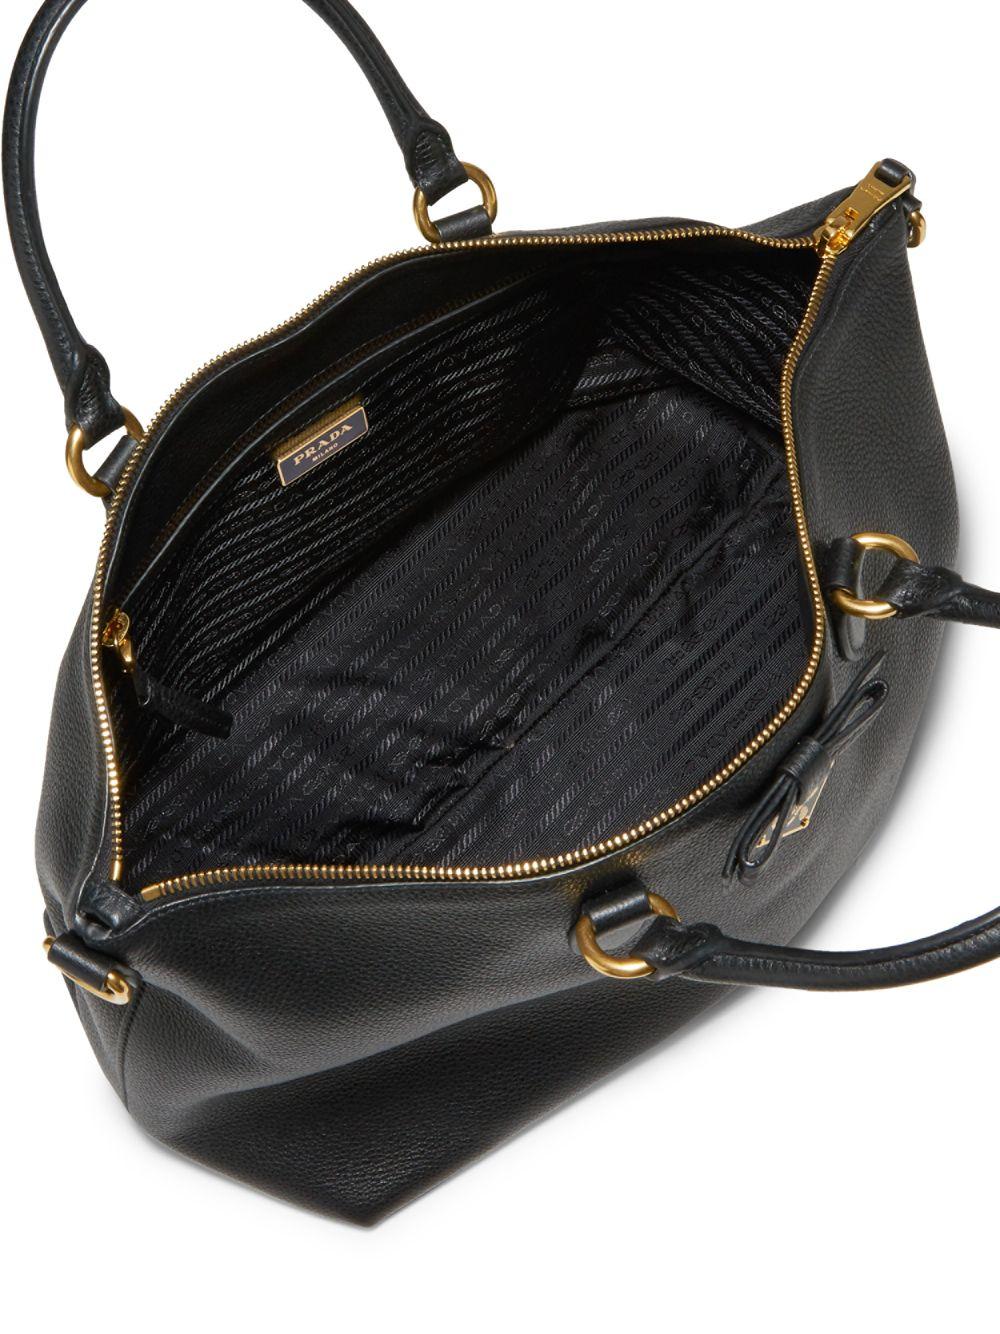 Prada Leather Crossbody Bag in Black Black (Black) - Lyst